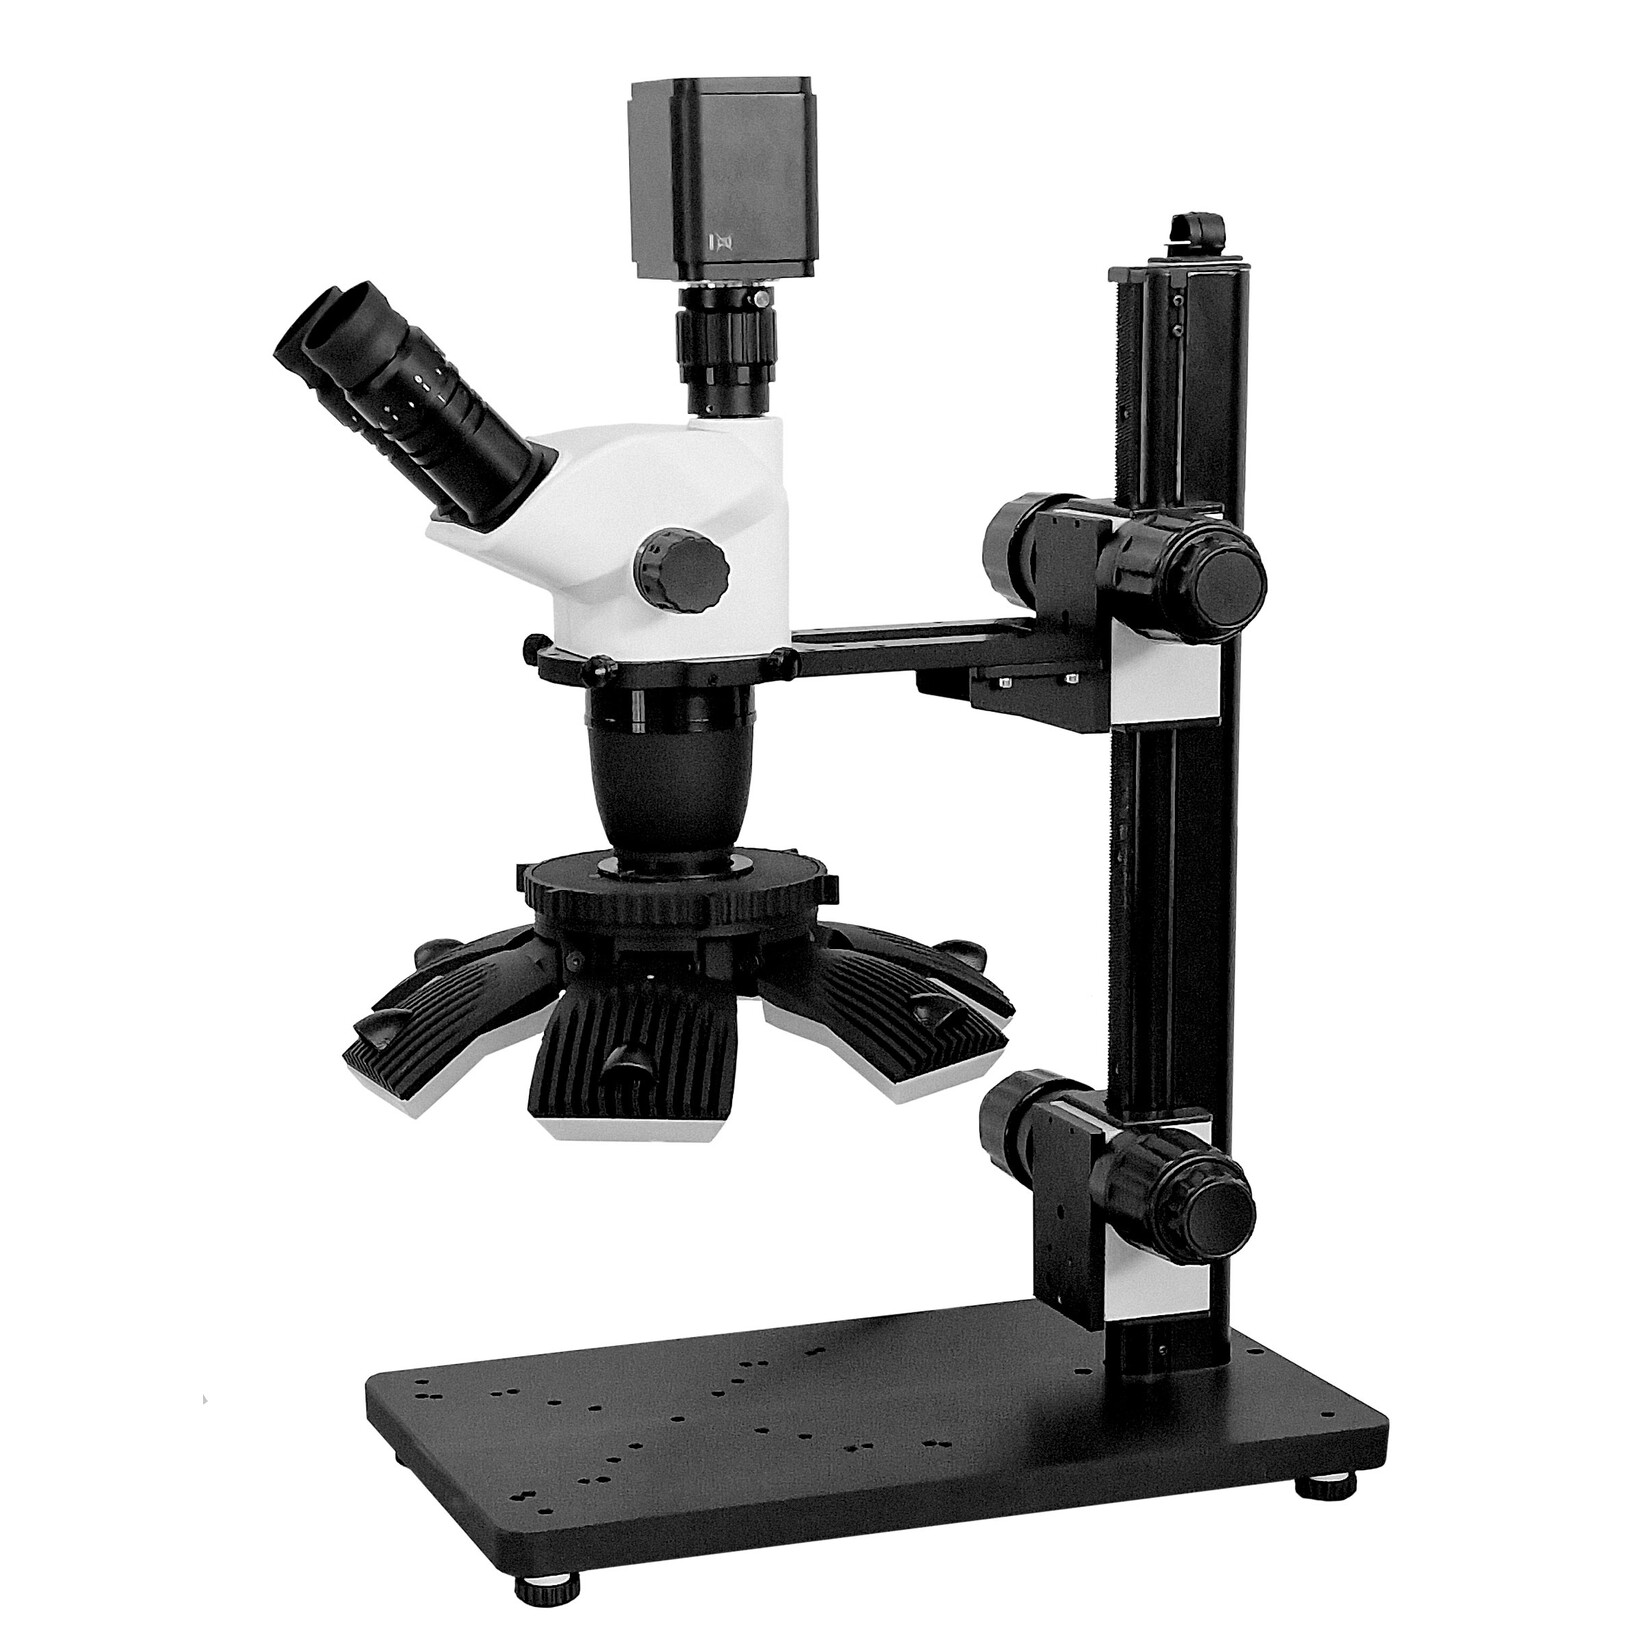 KITO-NEXIUS-HDMI - the stereo microscope with additional HDMI camera